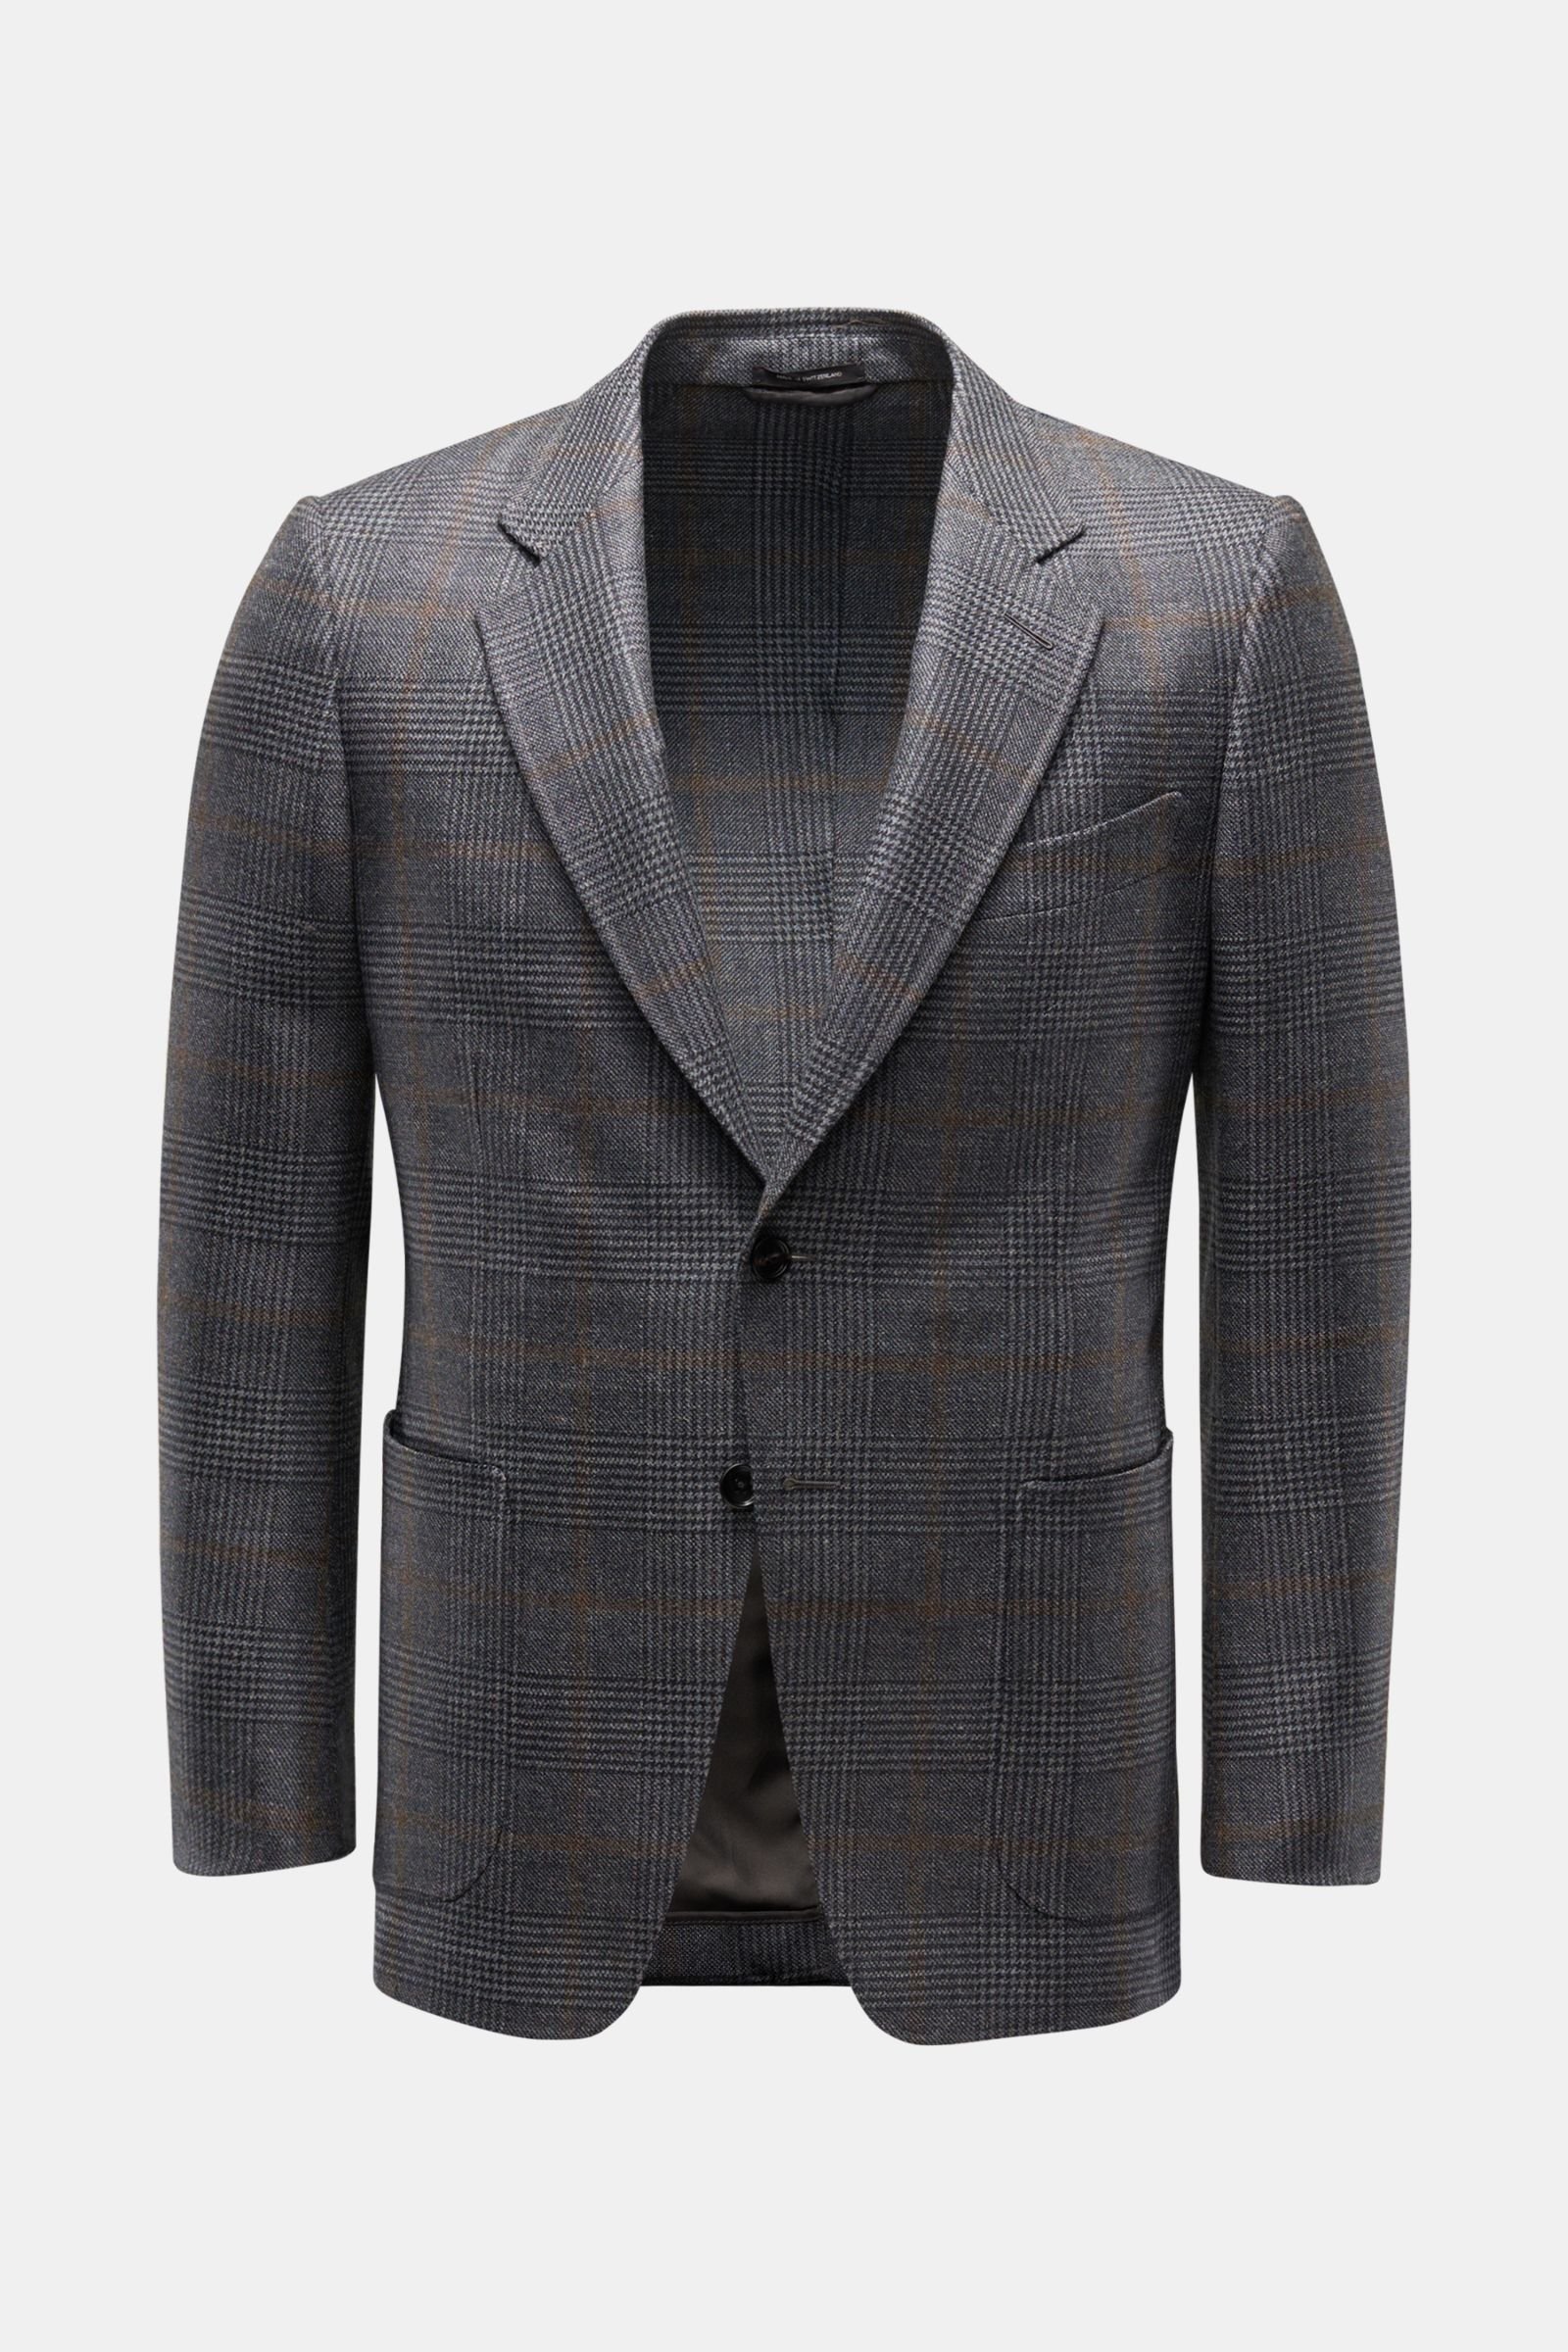 TOM FORD smart-casual jacket 'O'Connor' dark grey/brown checked | BRAUN  Hamburg